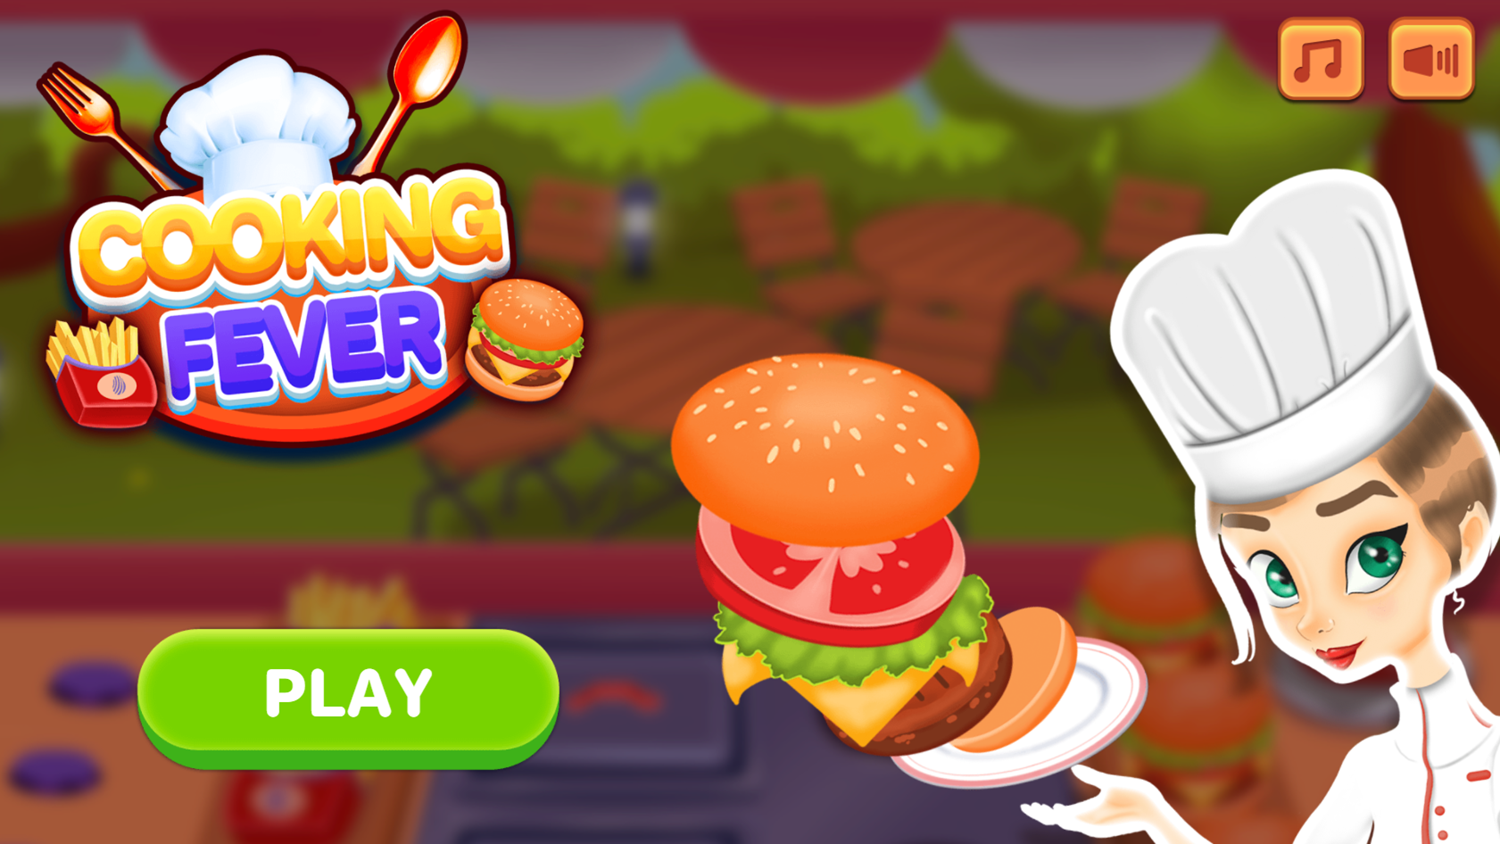 Cooking Fever Game Welcome Screen Screenshot.